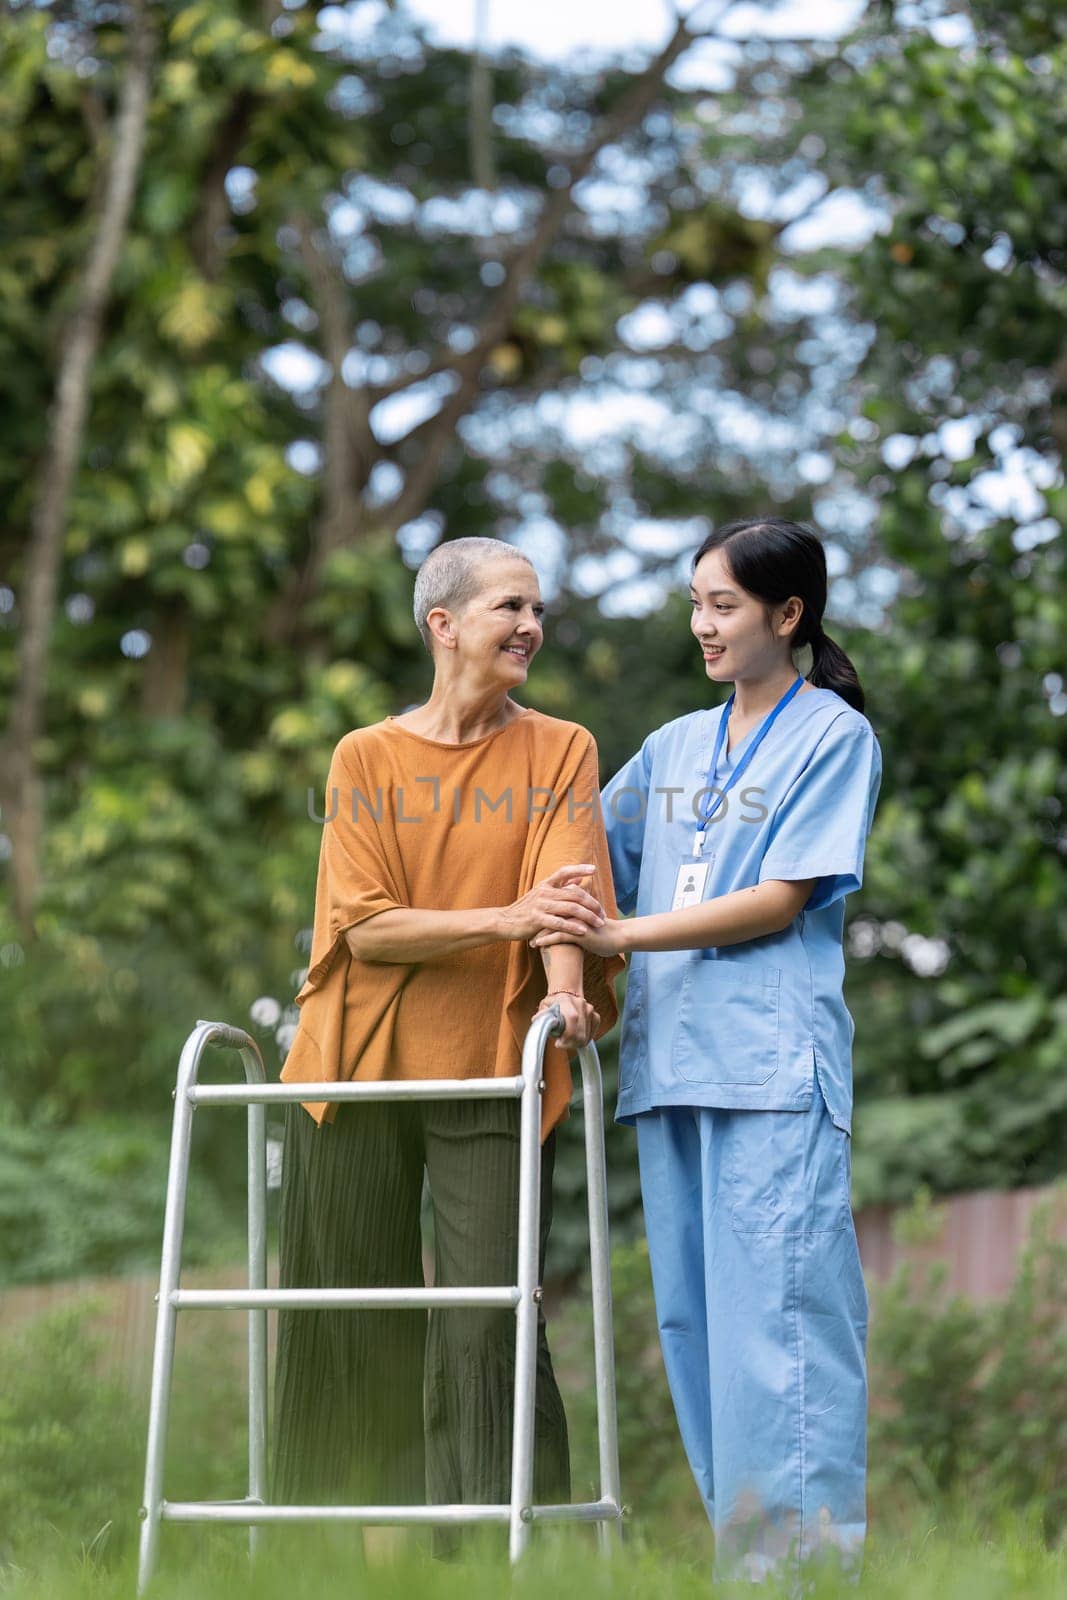 Nurse or caregiver help elderly walk by using walker and elderly touching caregiver hand.